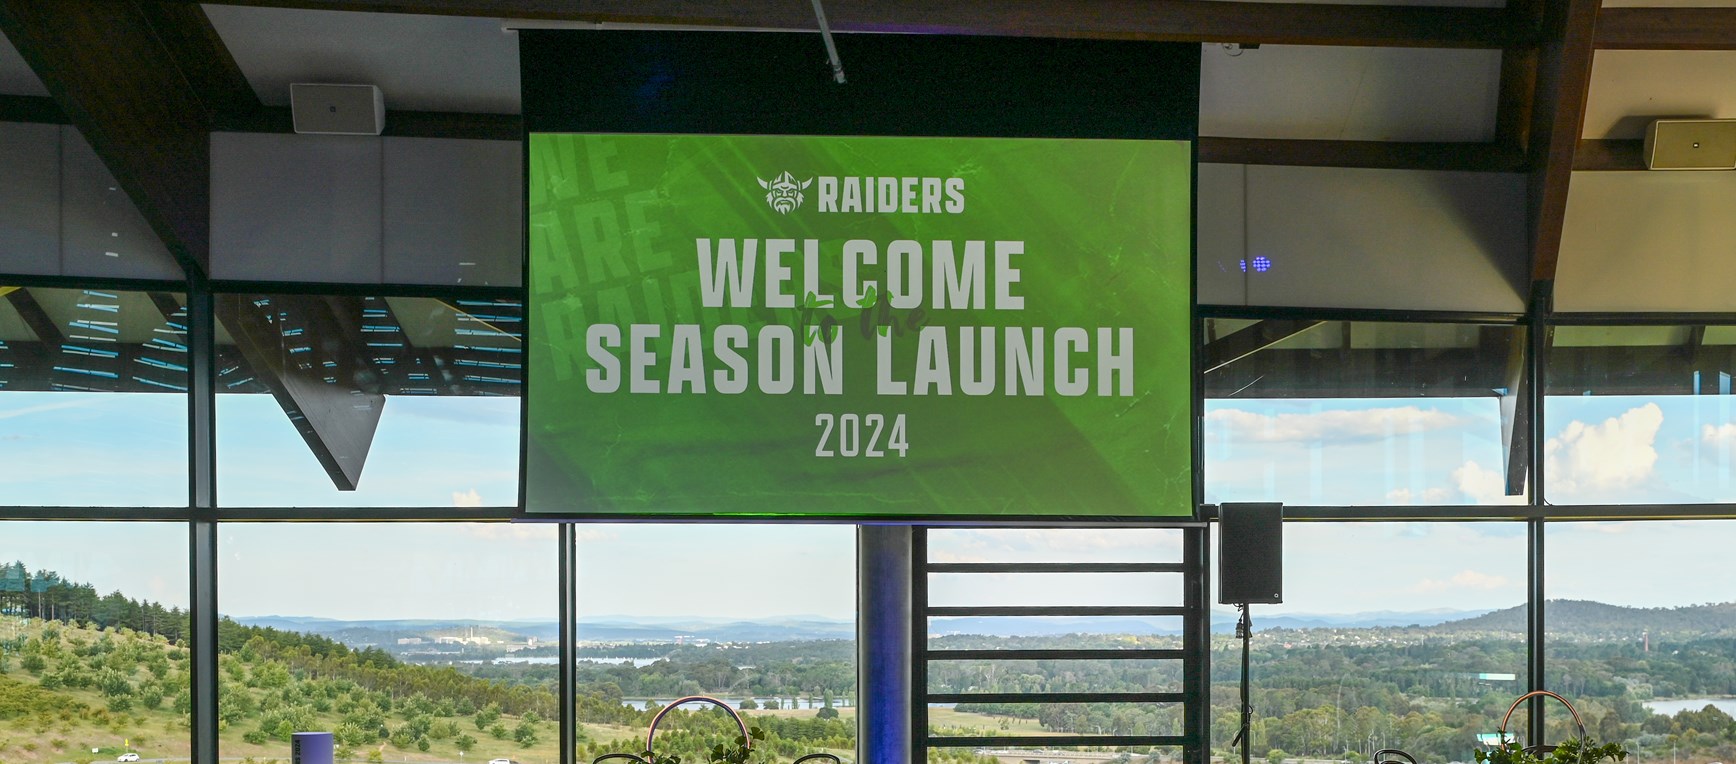 Gallery: 2024 Raiders Season Launch